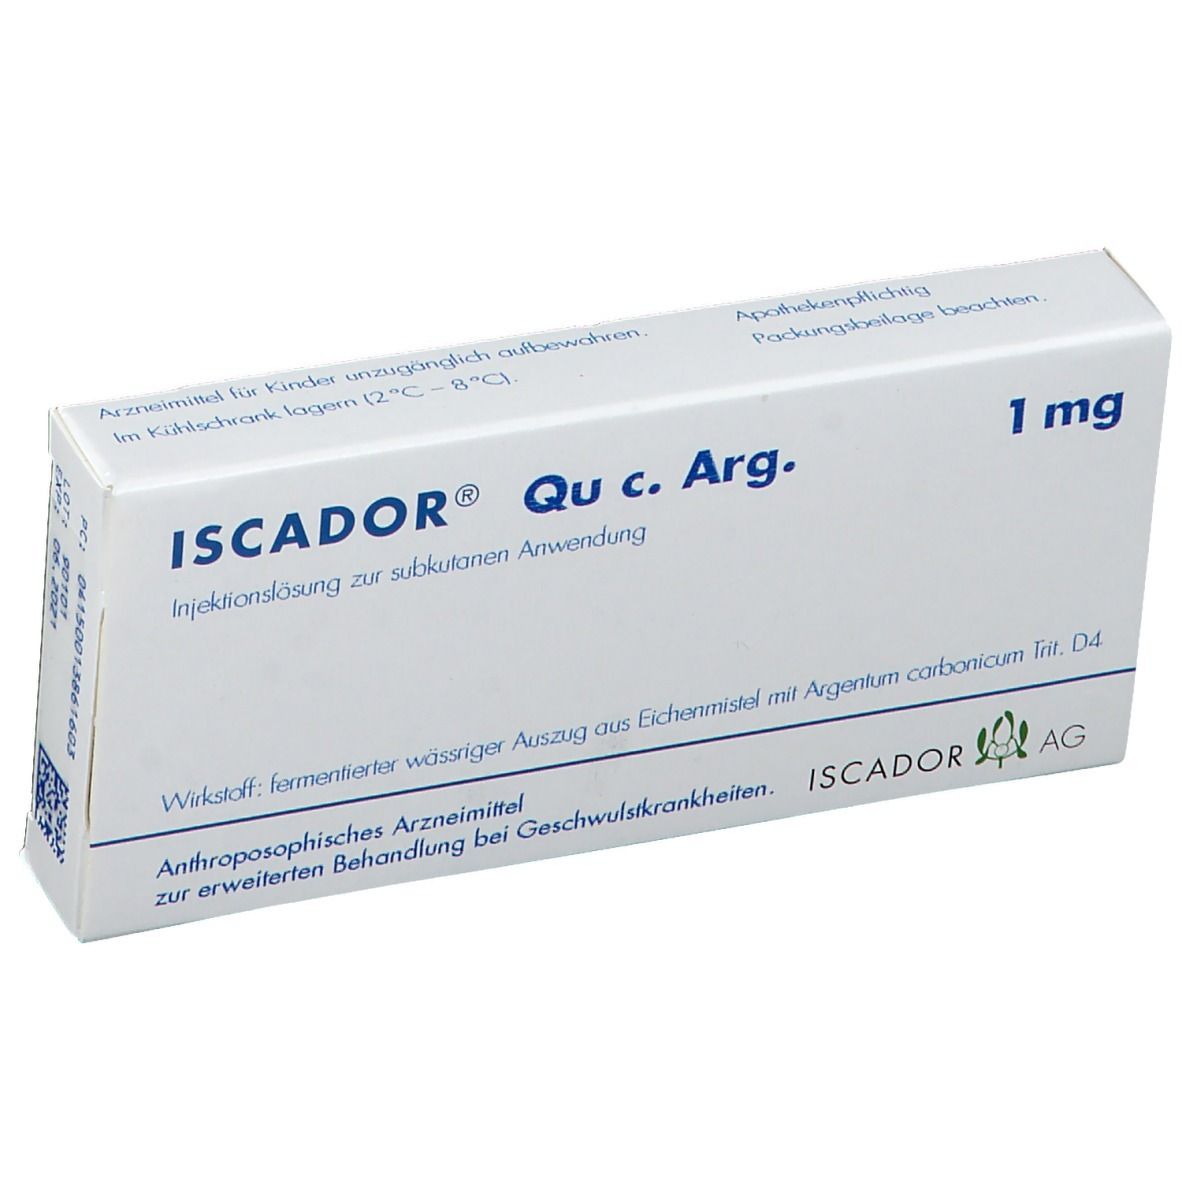 ISCADOR® Qu c. Arg. 1 mg